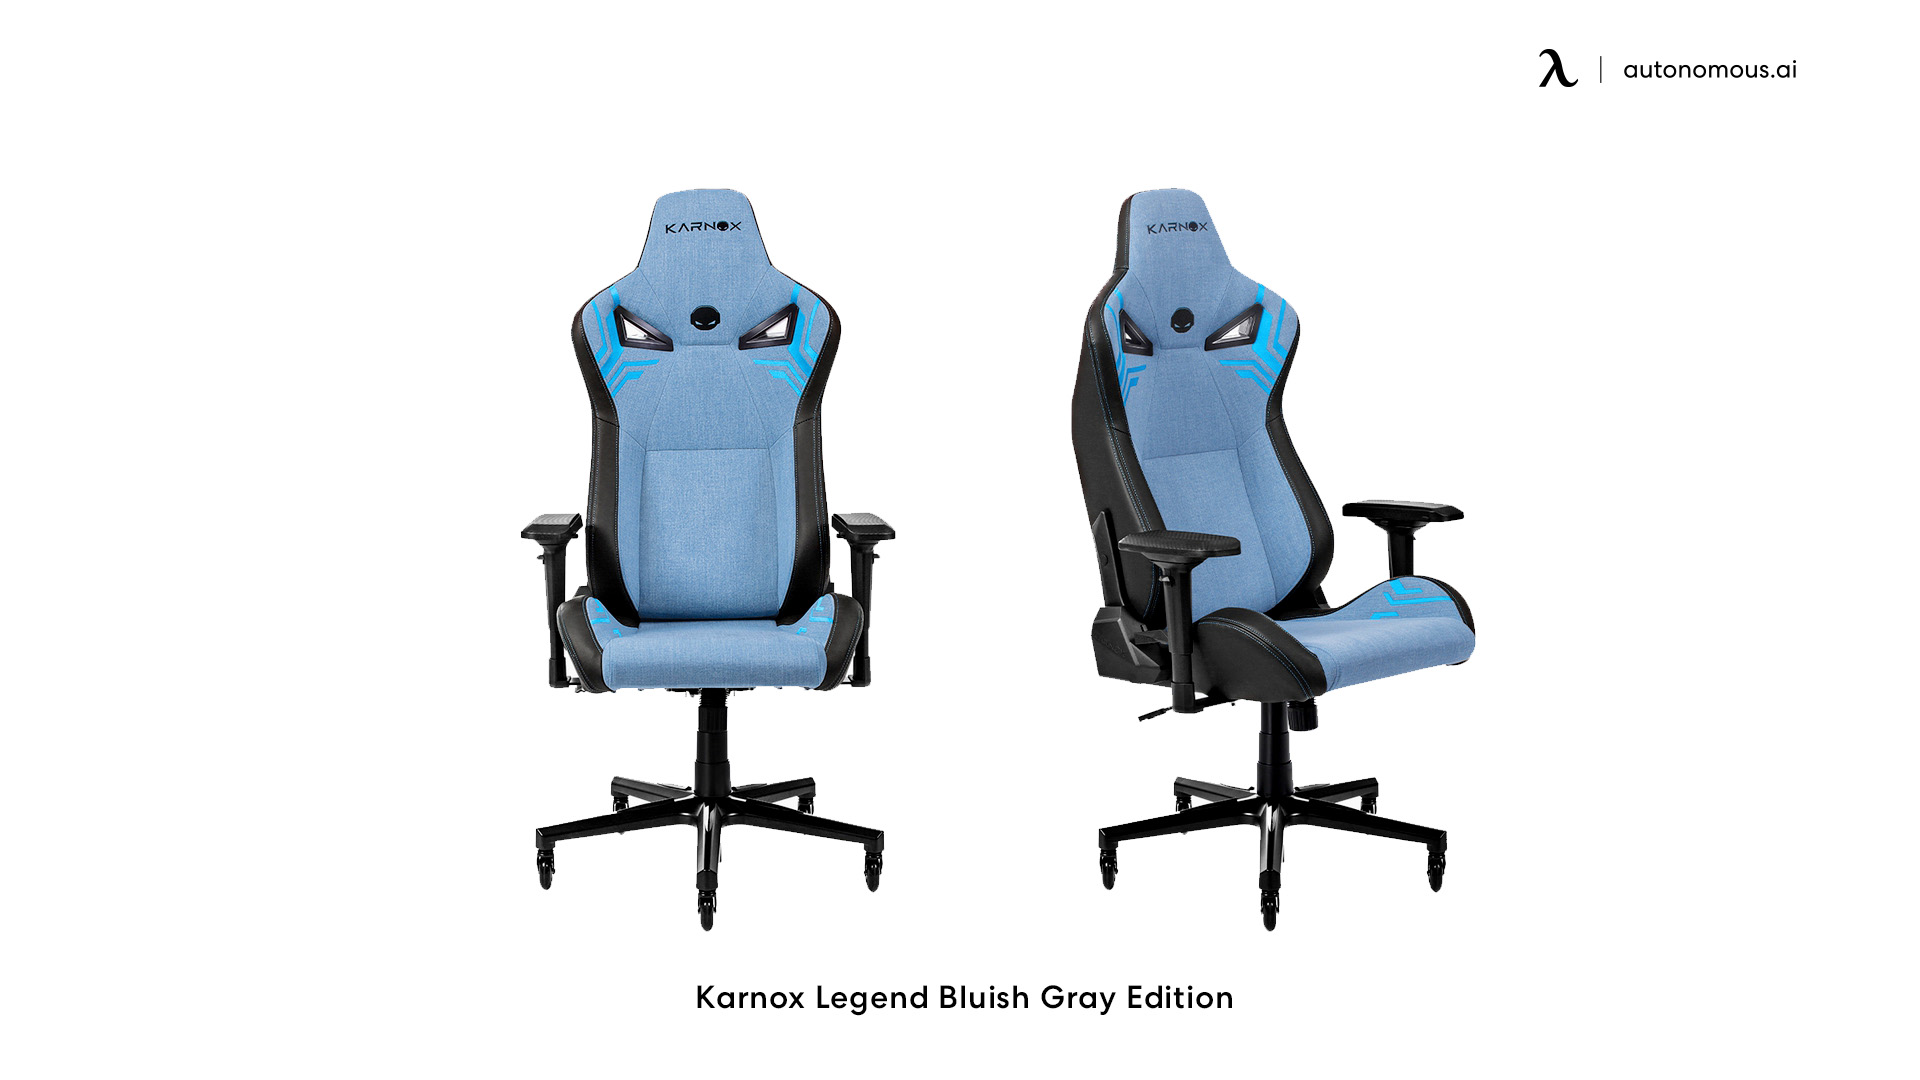 Karnox Legend Bluish Gray Edition super comfortable gaming chair